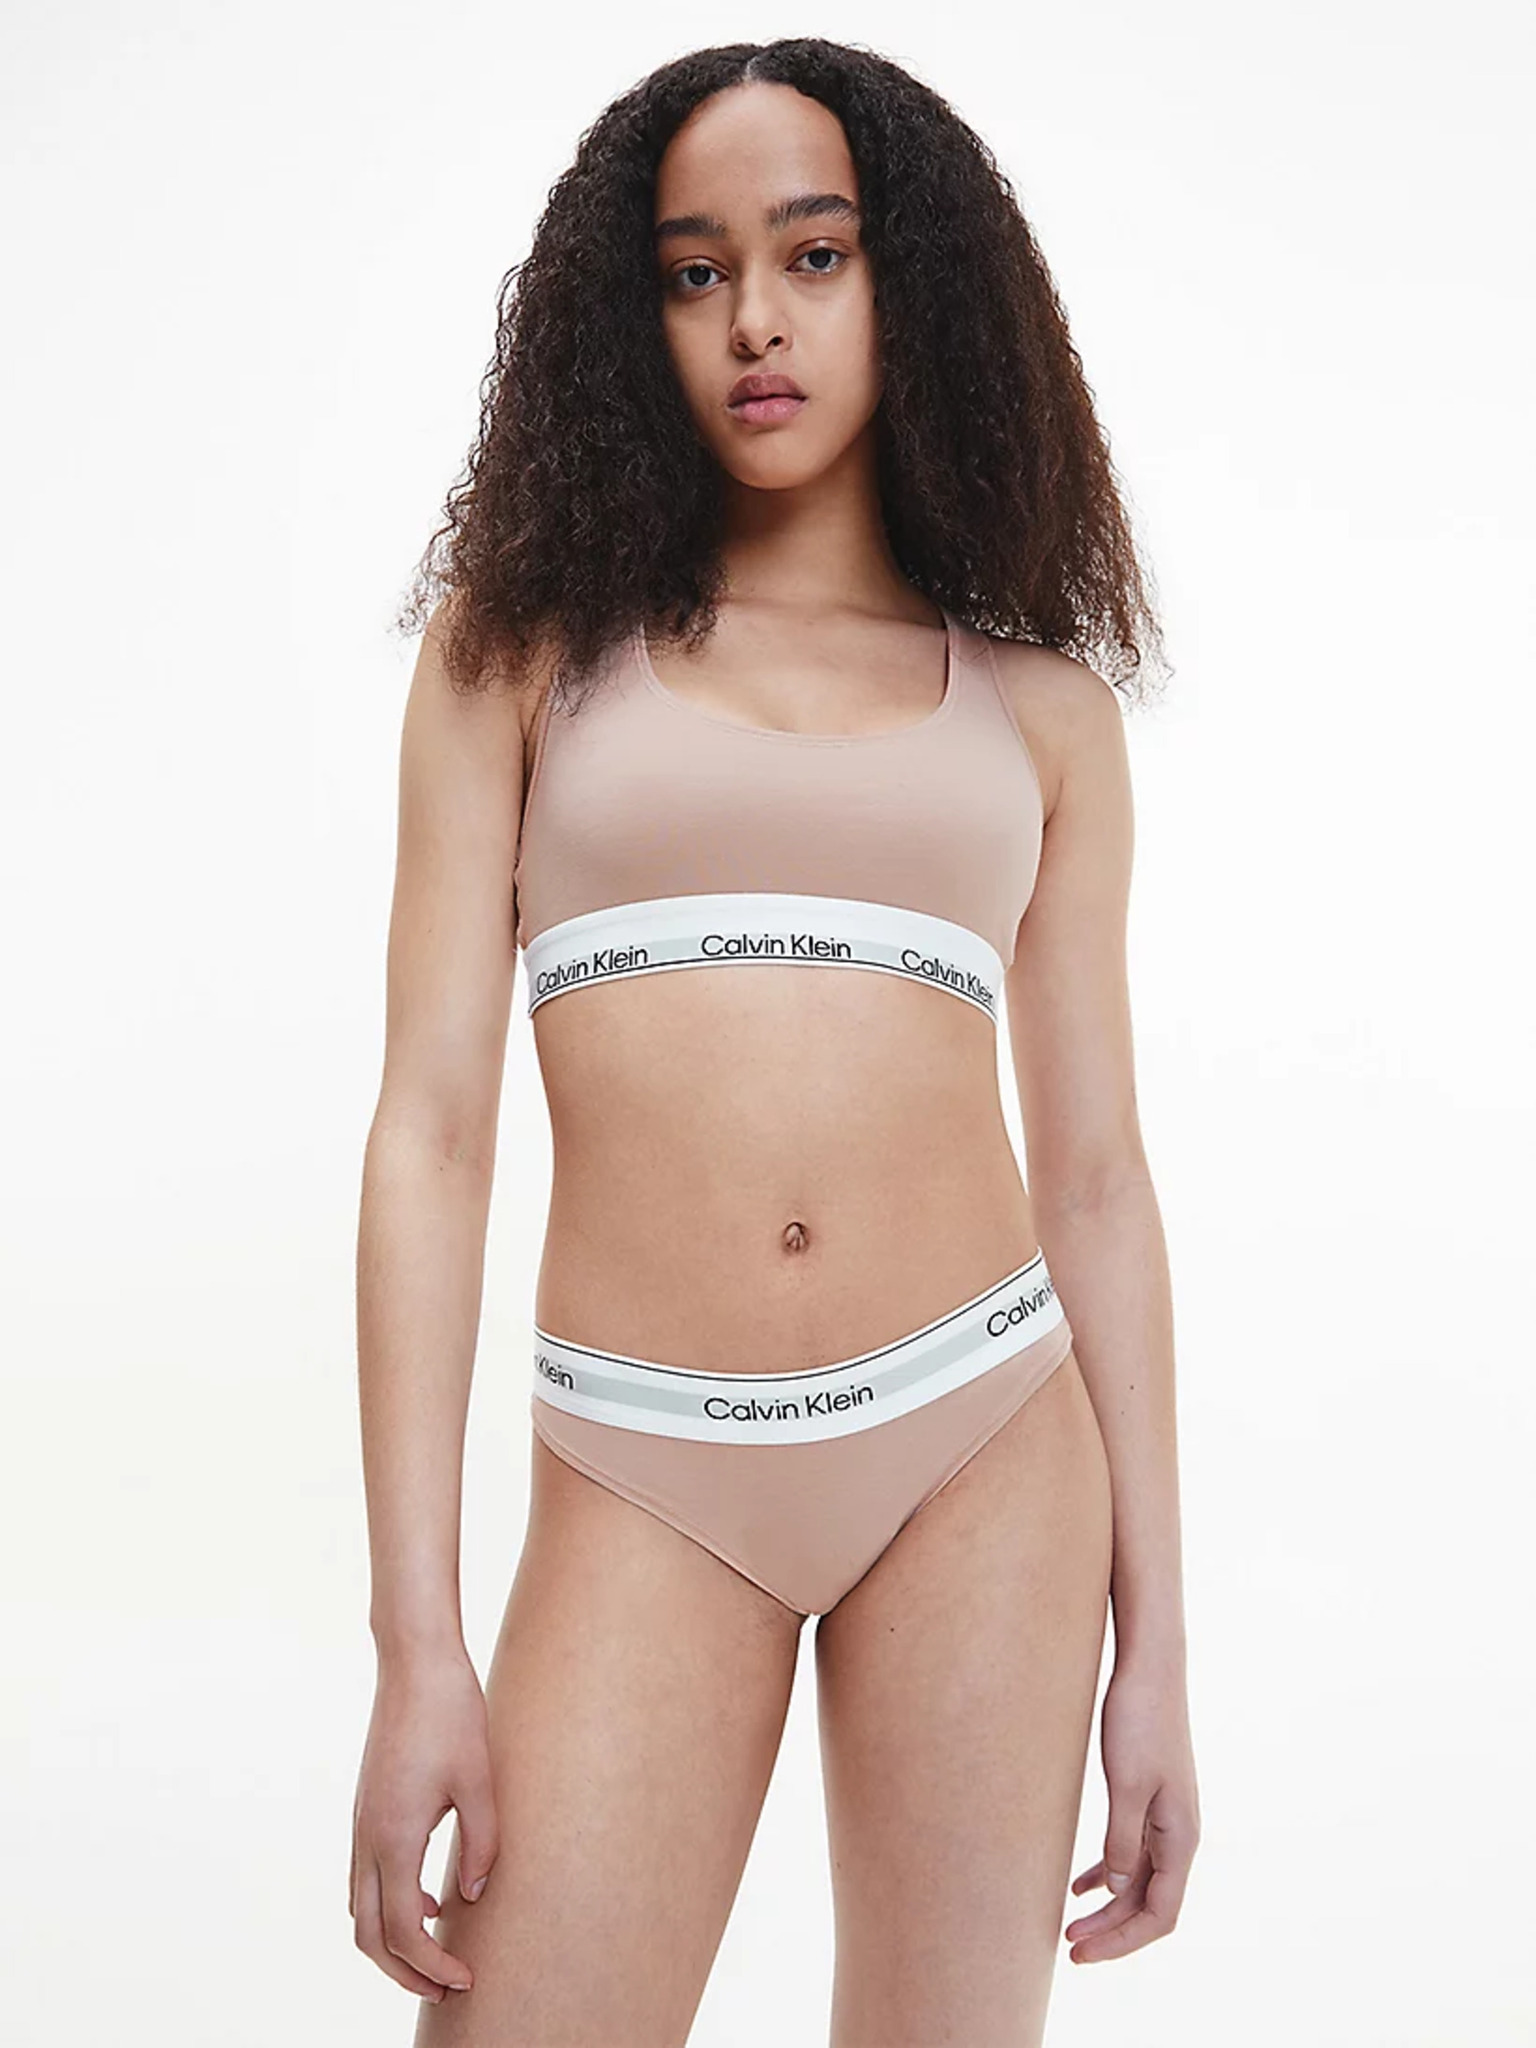 Calvin Klein set panties and bras